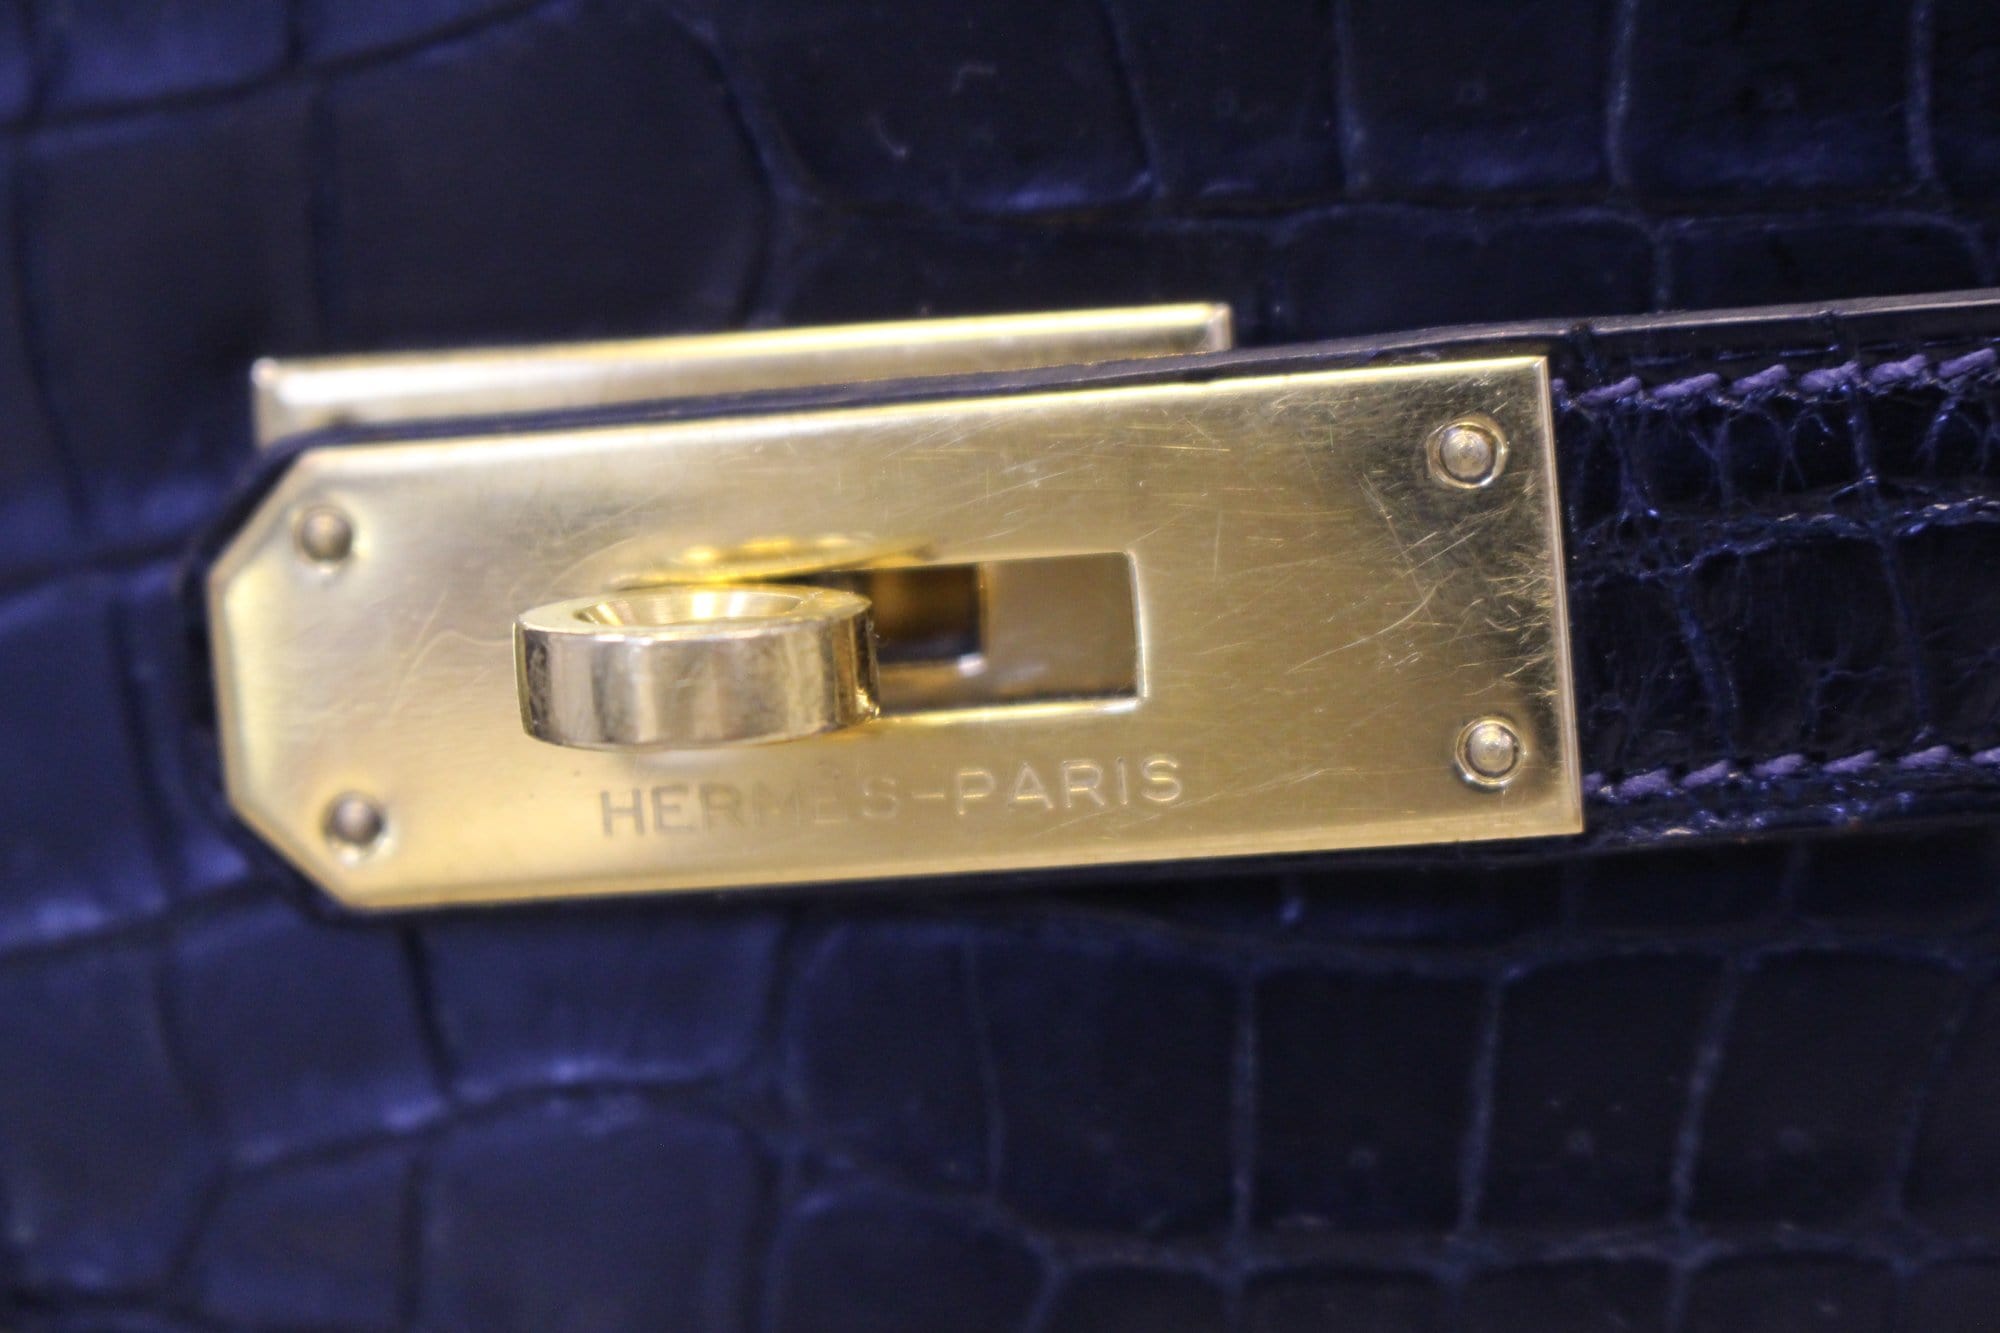 Hermes Kelly Metallic Gold Bag